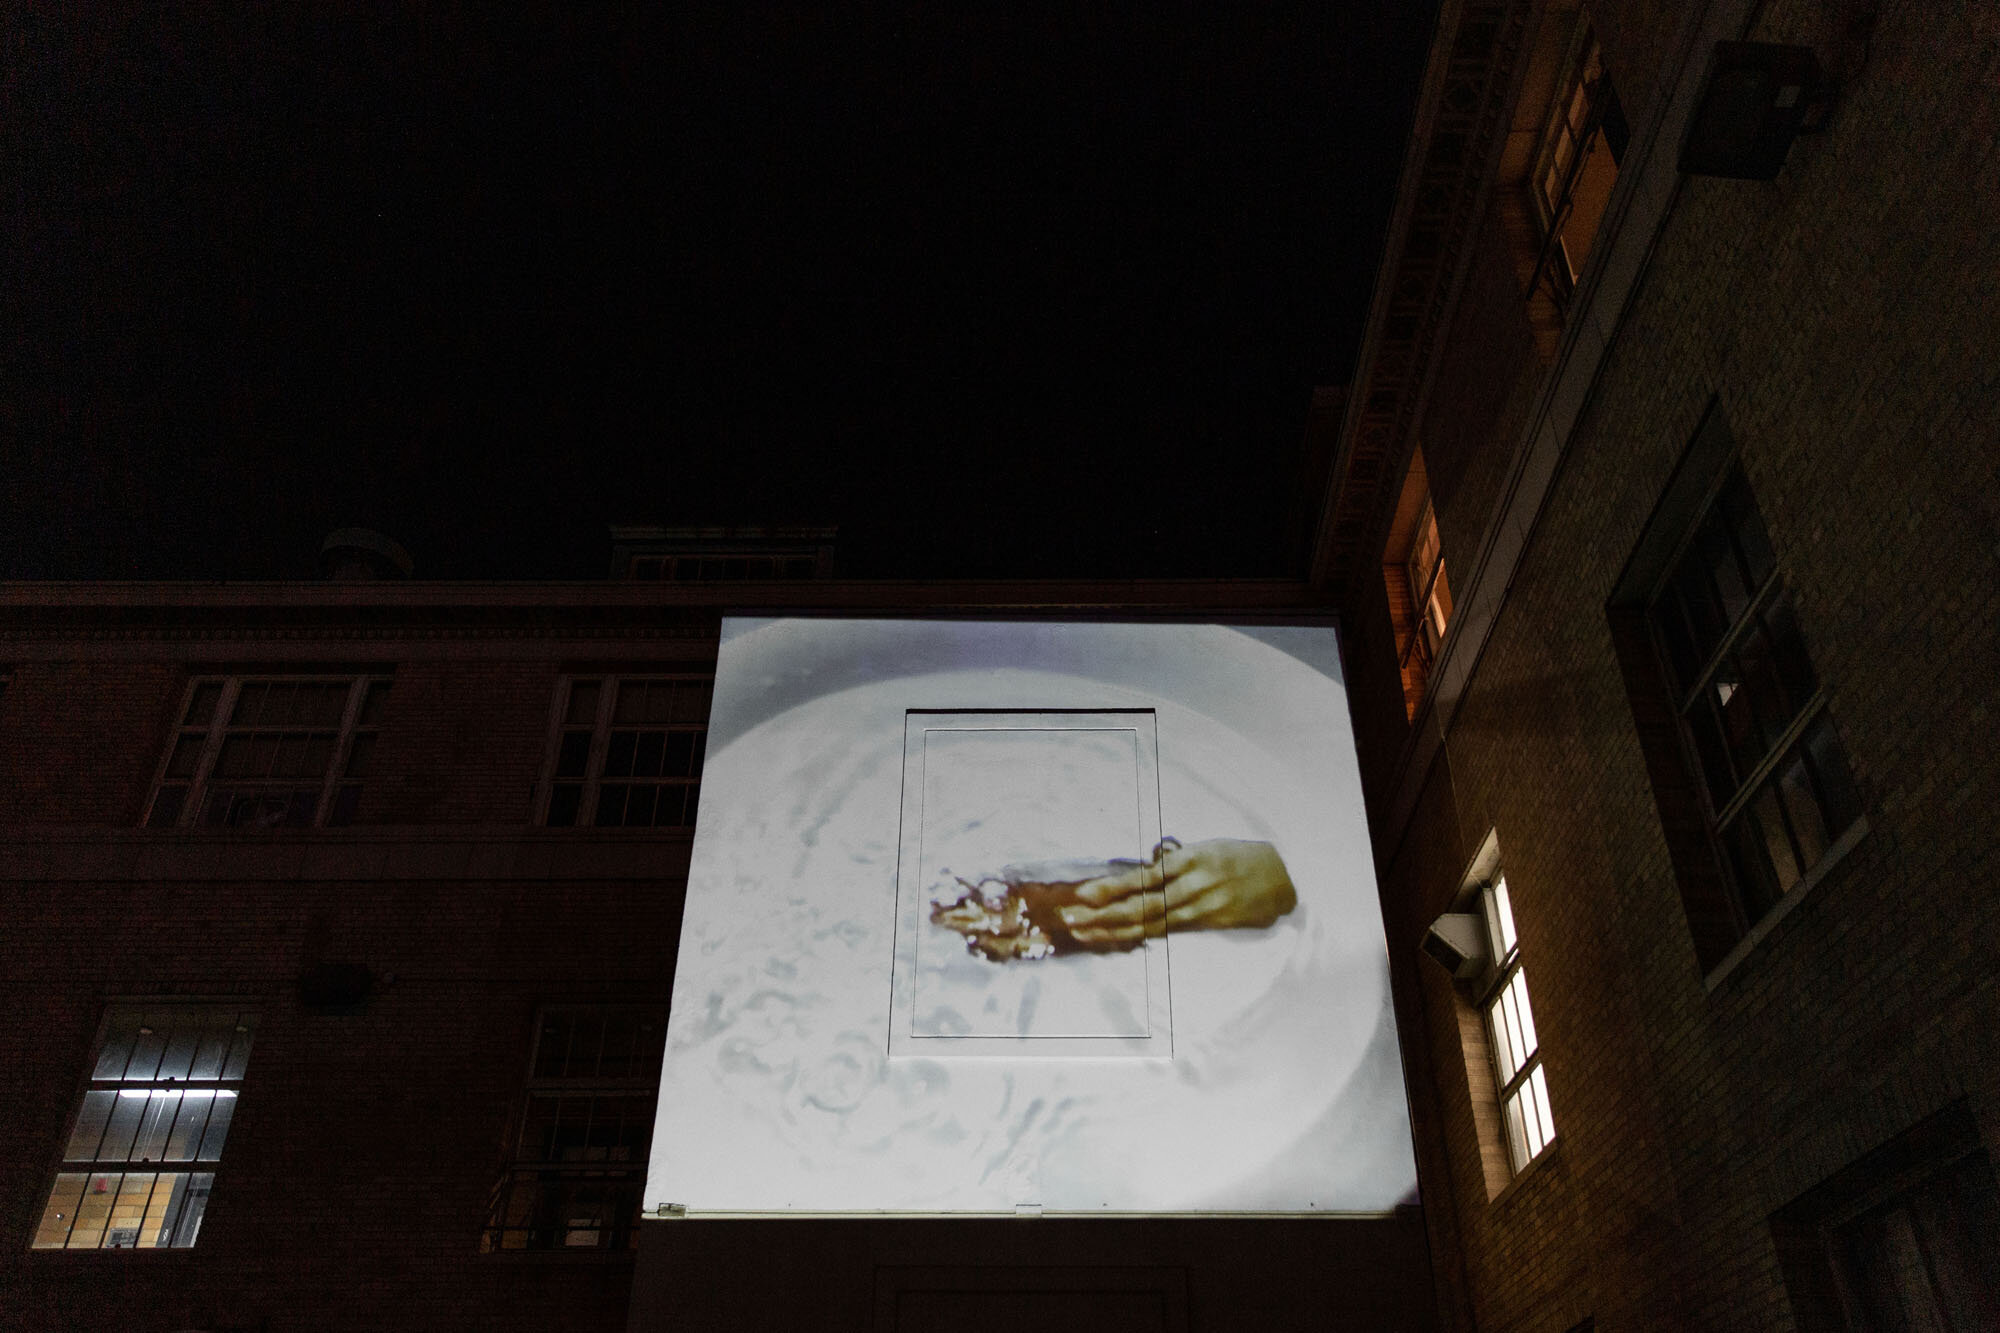  “Undercurrent” by Gazelle Samizay &amp; Labkhand Olfatmanesh​ on view at The High Wall. Documentation by Rafael Soldi 